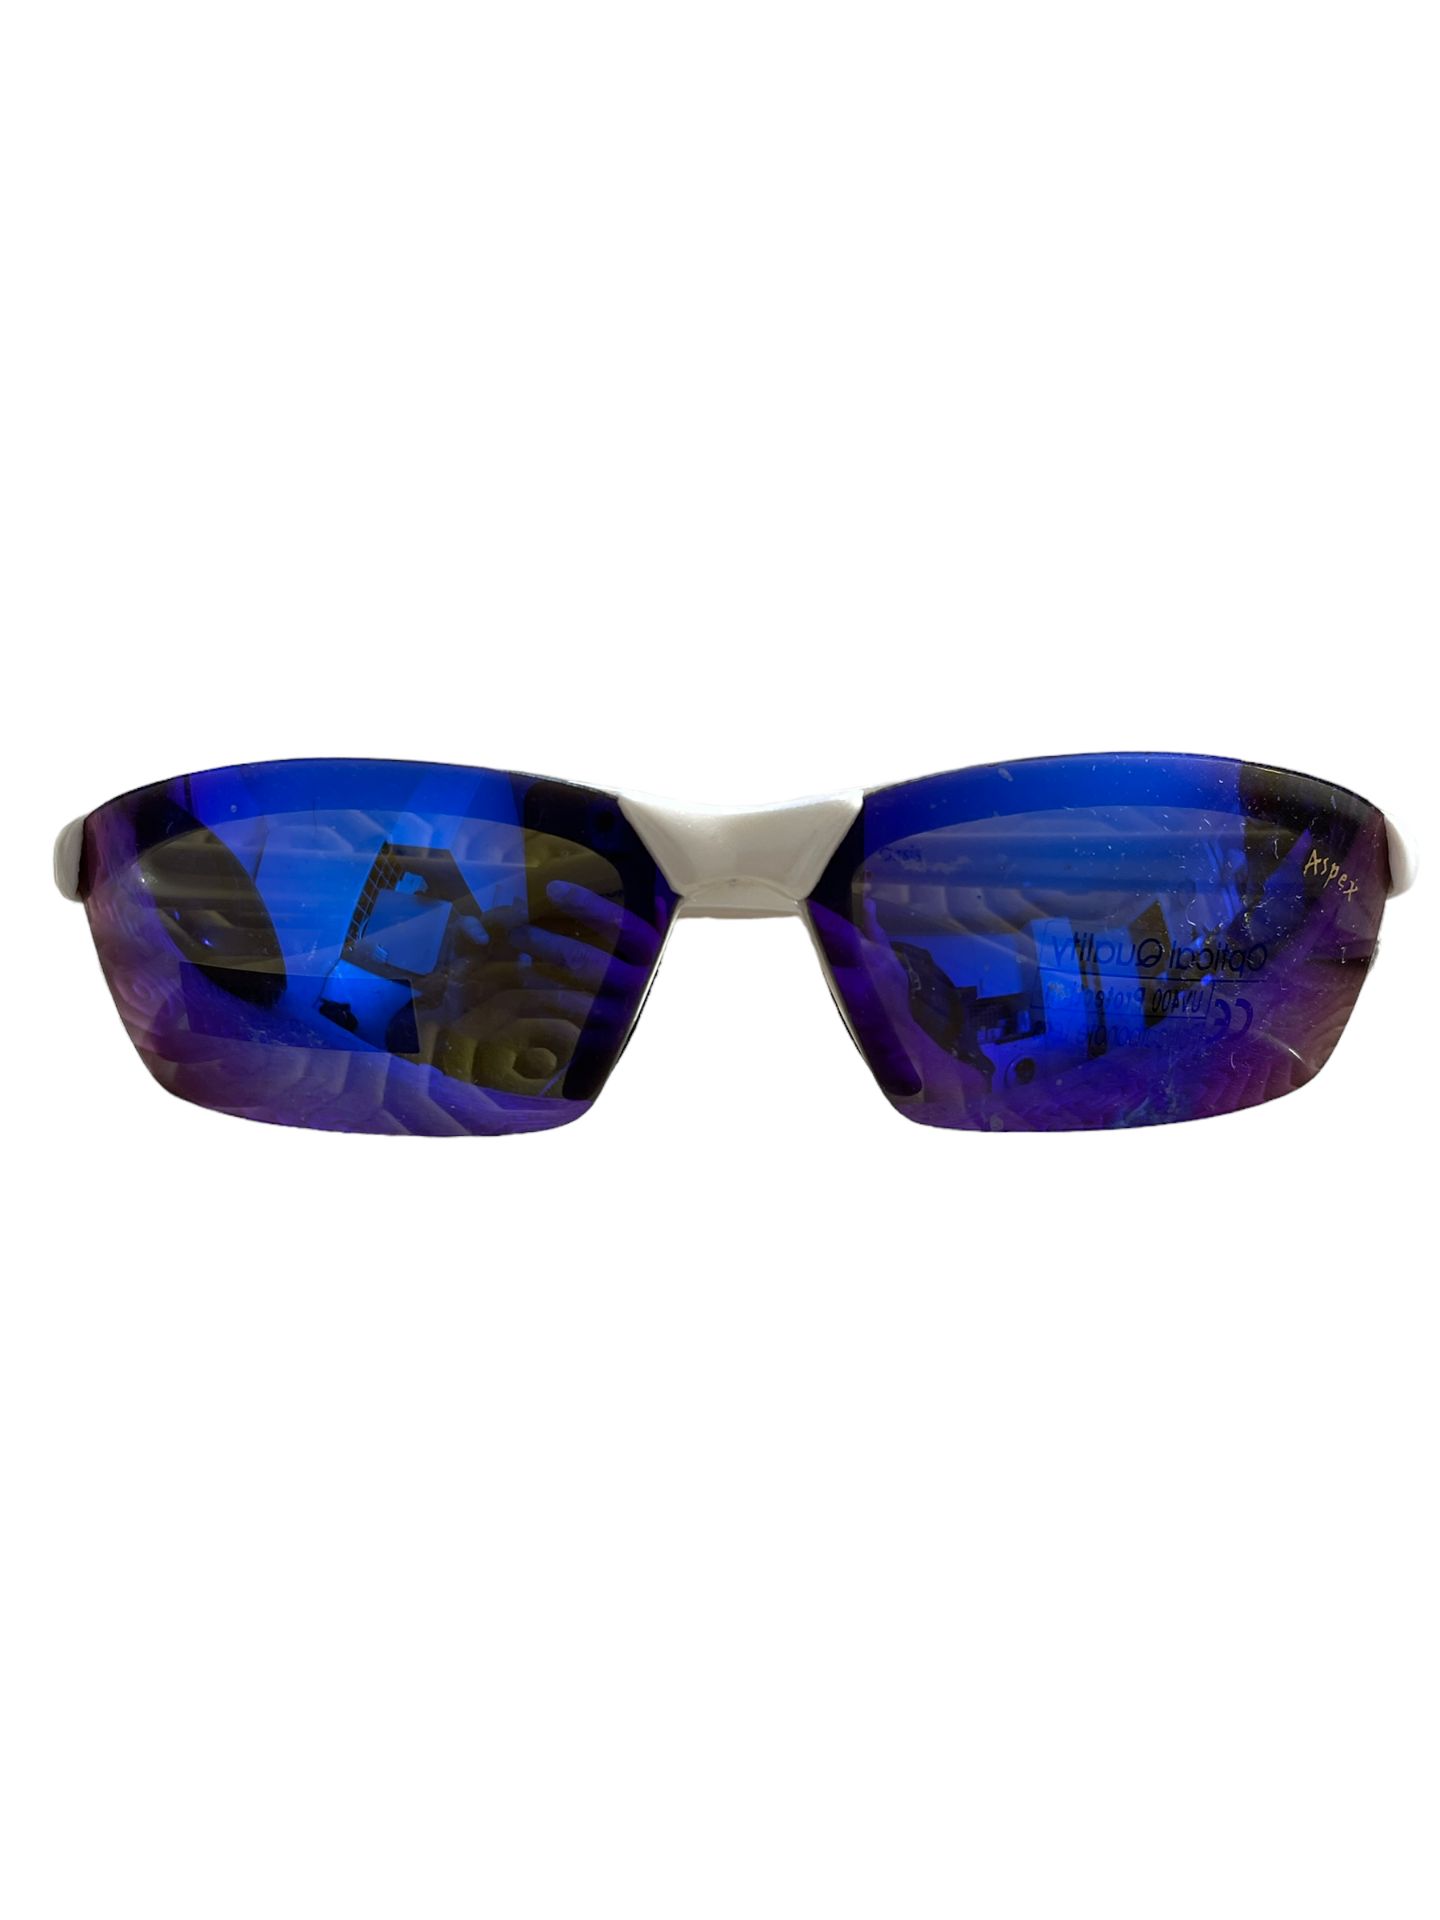 Apex sunglasses blue. - Image 3 of 3